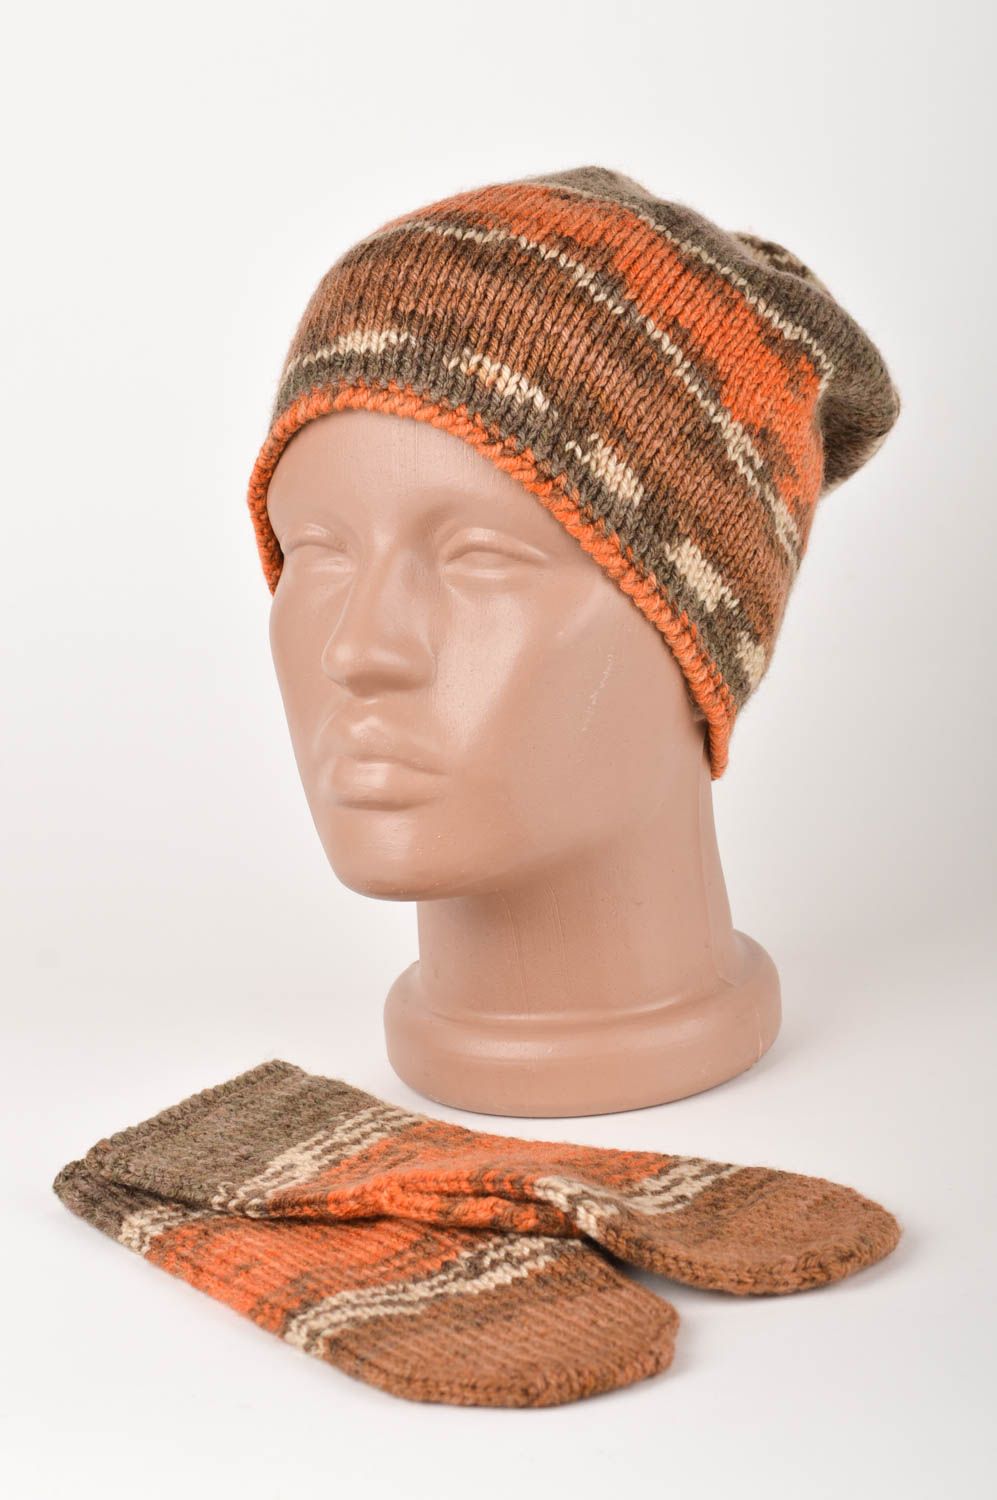 Handmade woolen winter set crocheted cap and mittens warm accessories photo 3